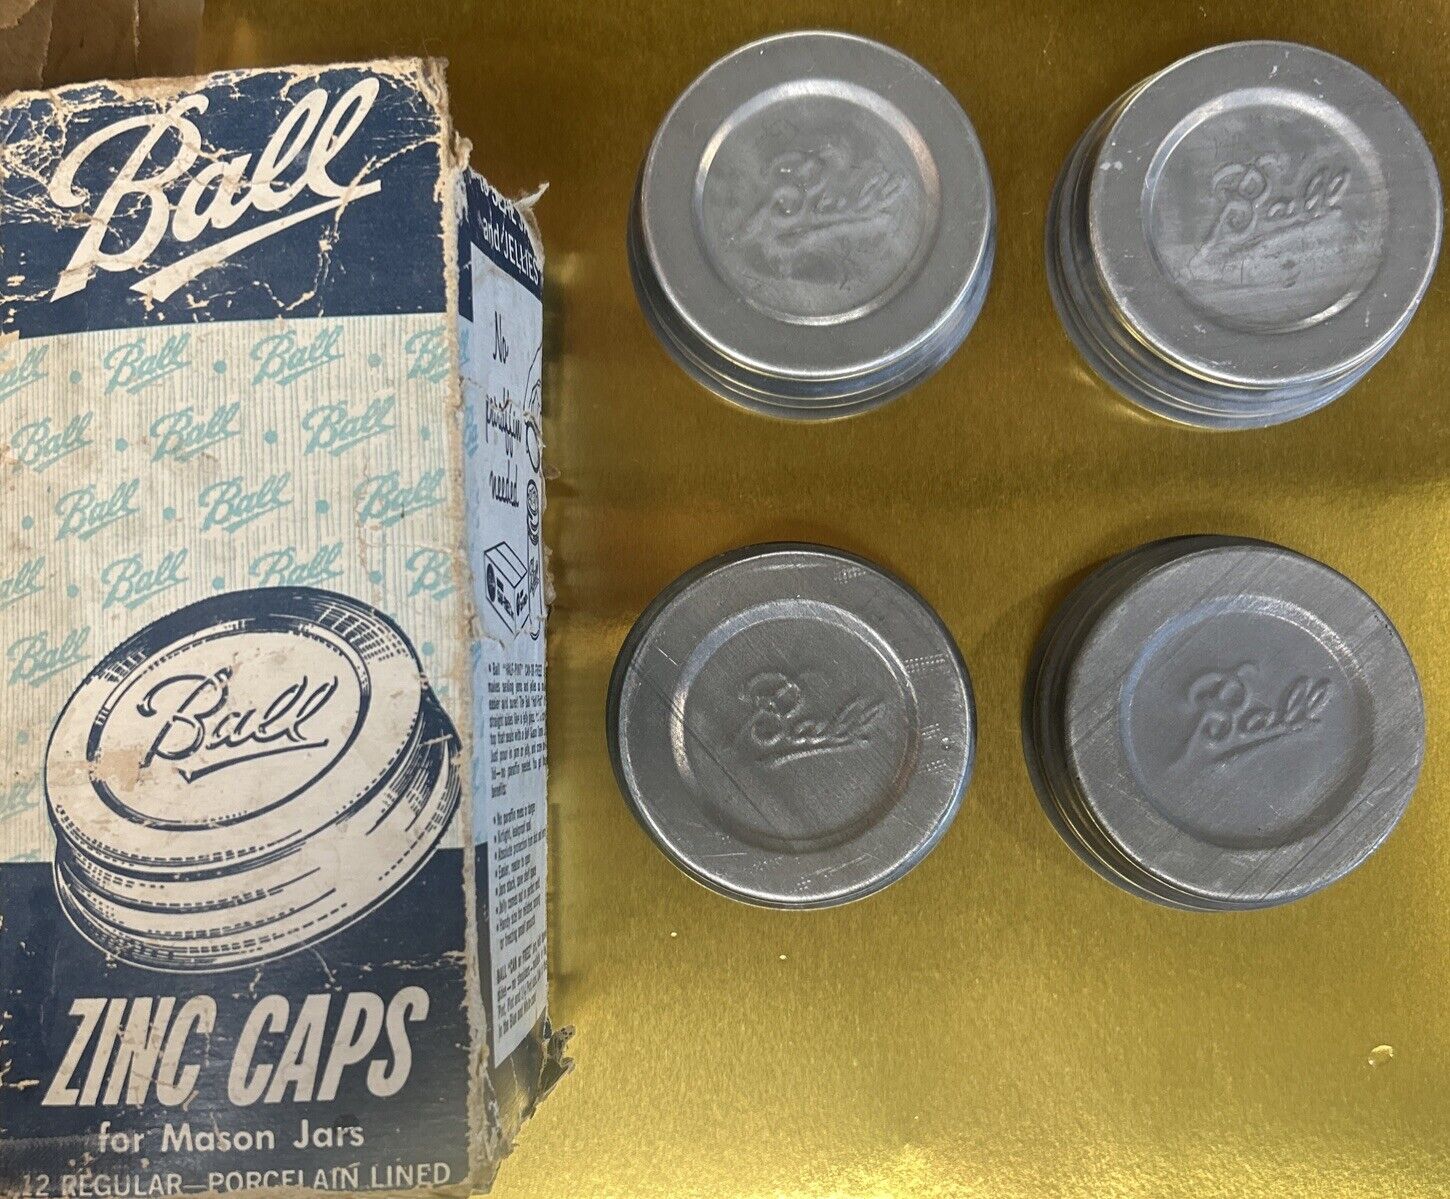 4 BALL ZINC REGULAR 3” JAR LIDS WHITE PORCELAIN LINERS WITH ORIGINAL BOX Vintage